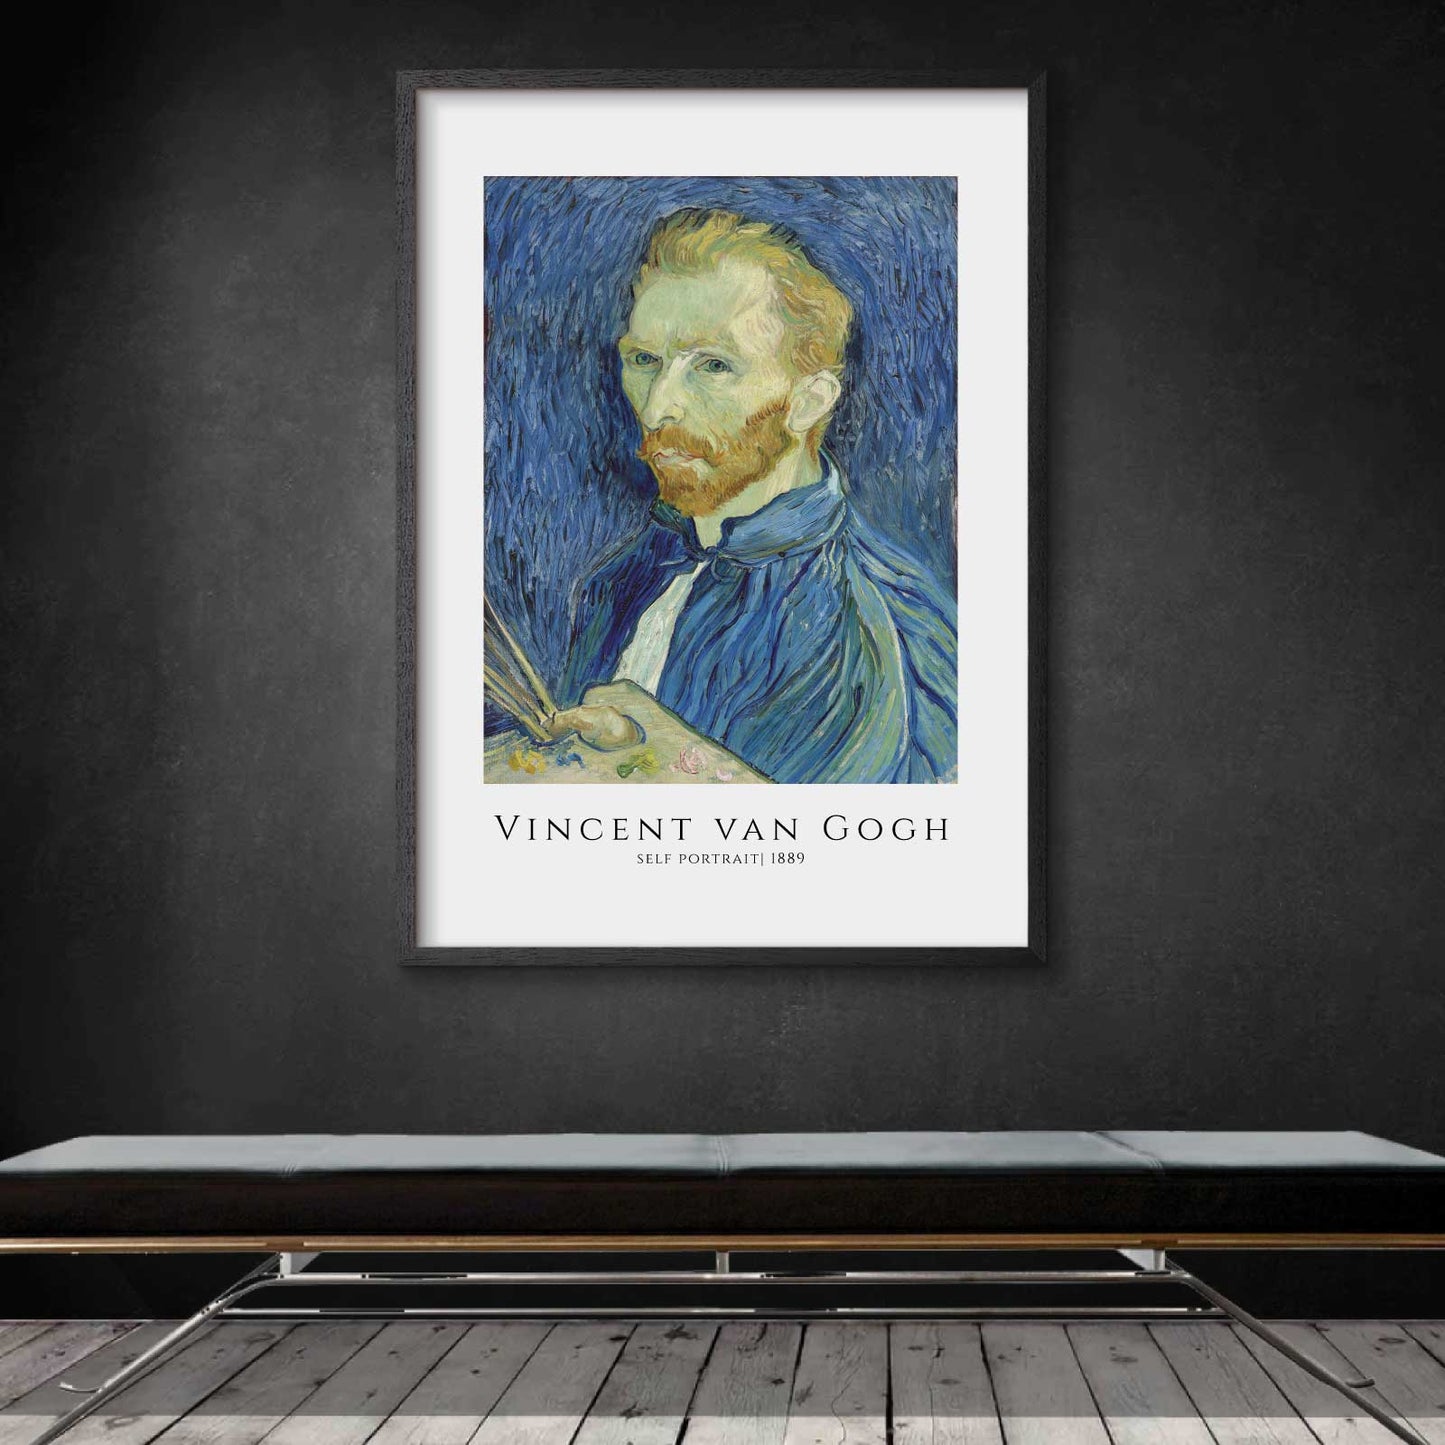 Art poster "Self portrait august 1889" by van Gogh